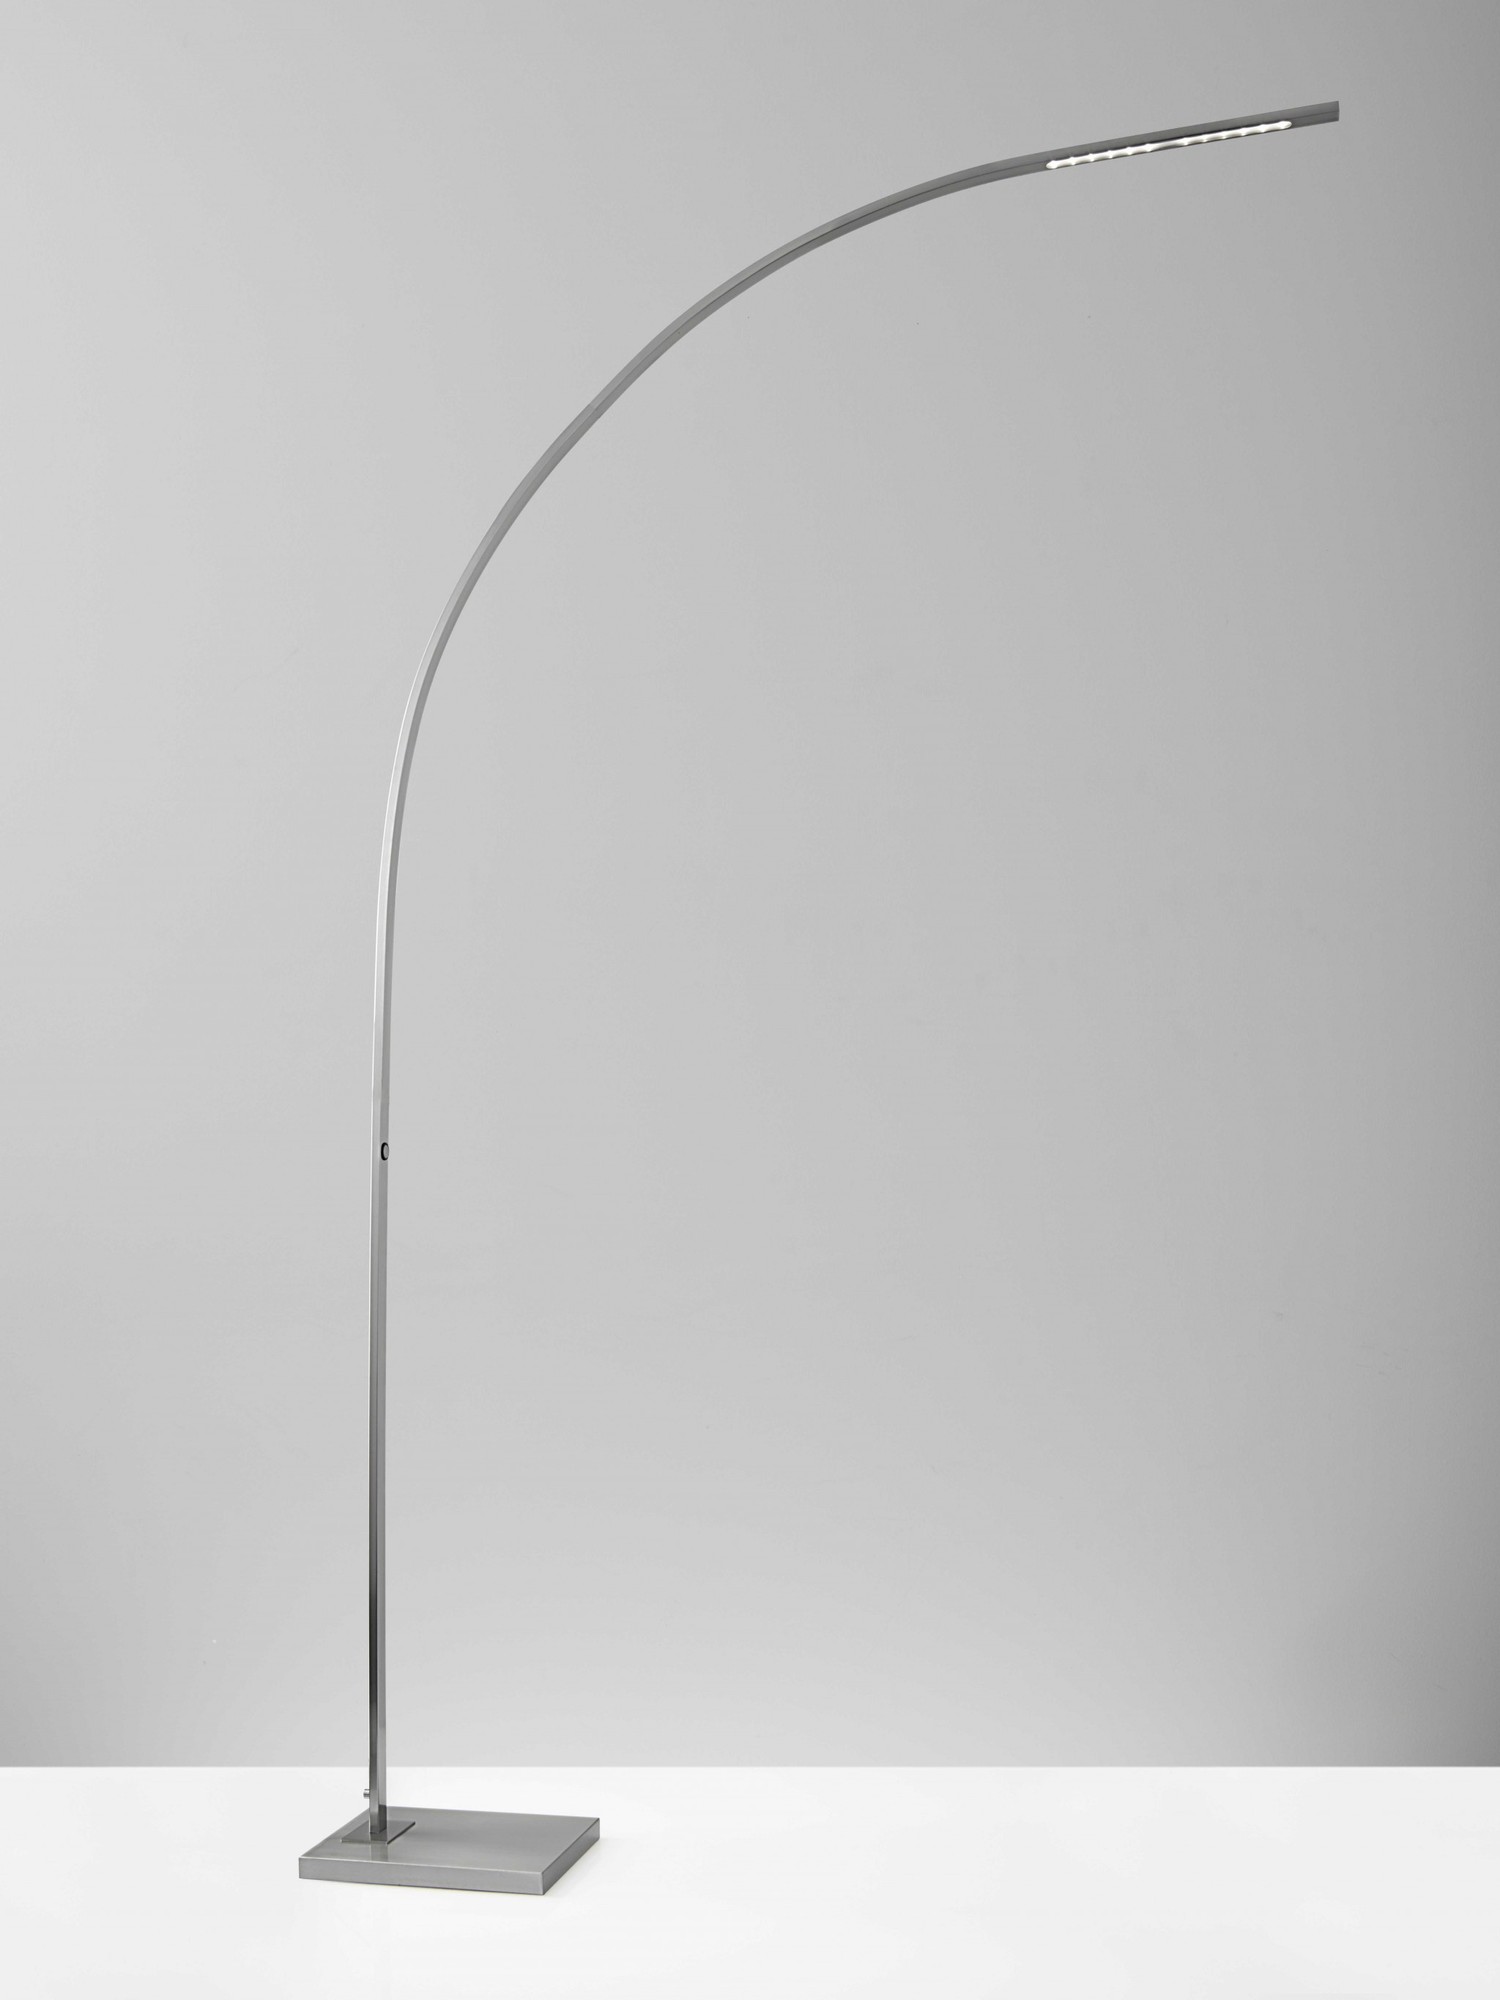 52" X 9.75" X 91" Brushed steel Metal LED Arc Lamp